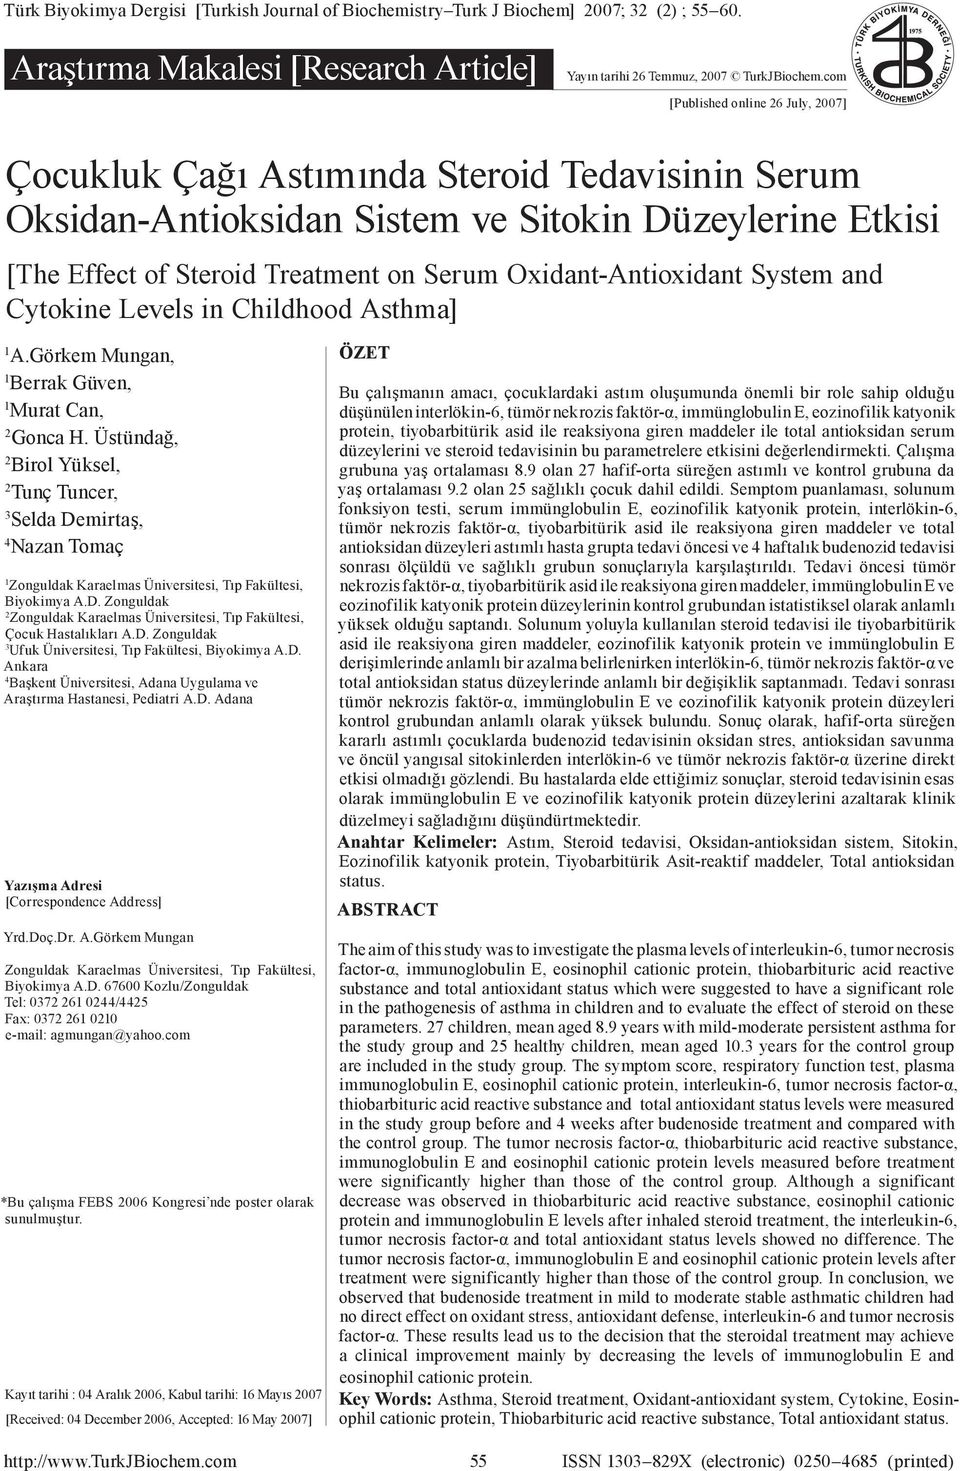 Oxidant-Antioxidant System and Cytokine Levels in Childhood Asthma] A.Görkem Mungan, Berrak Güven, Murat Can, Gonca H.